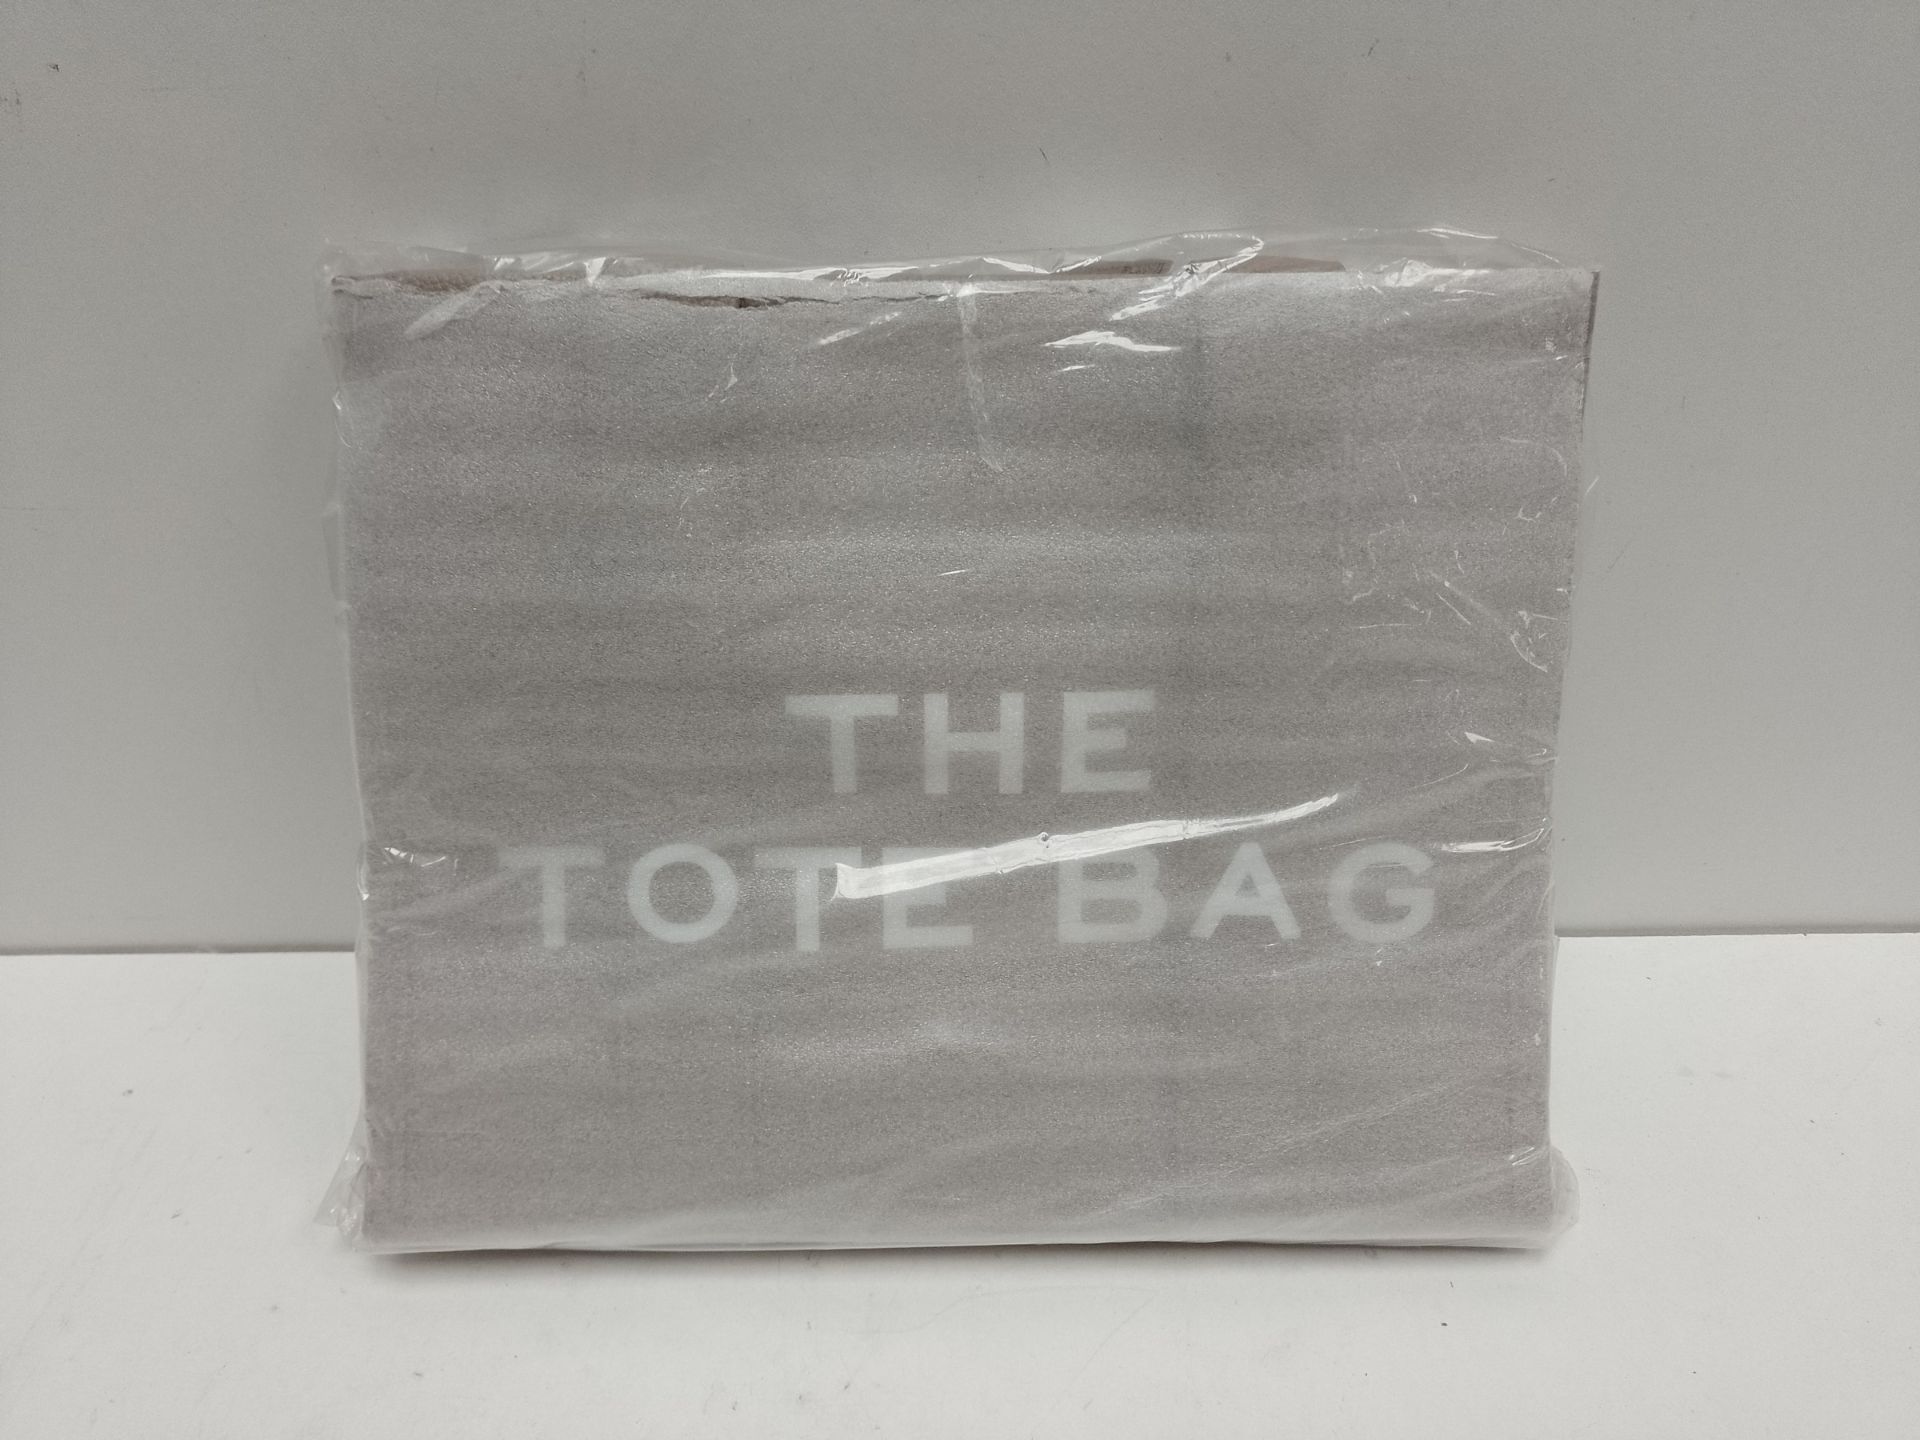 RRP £33.93 BRAND NEW STOCK DKIIL NOIYB Tote Bag for Women - Image 2 of 2